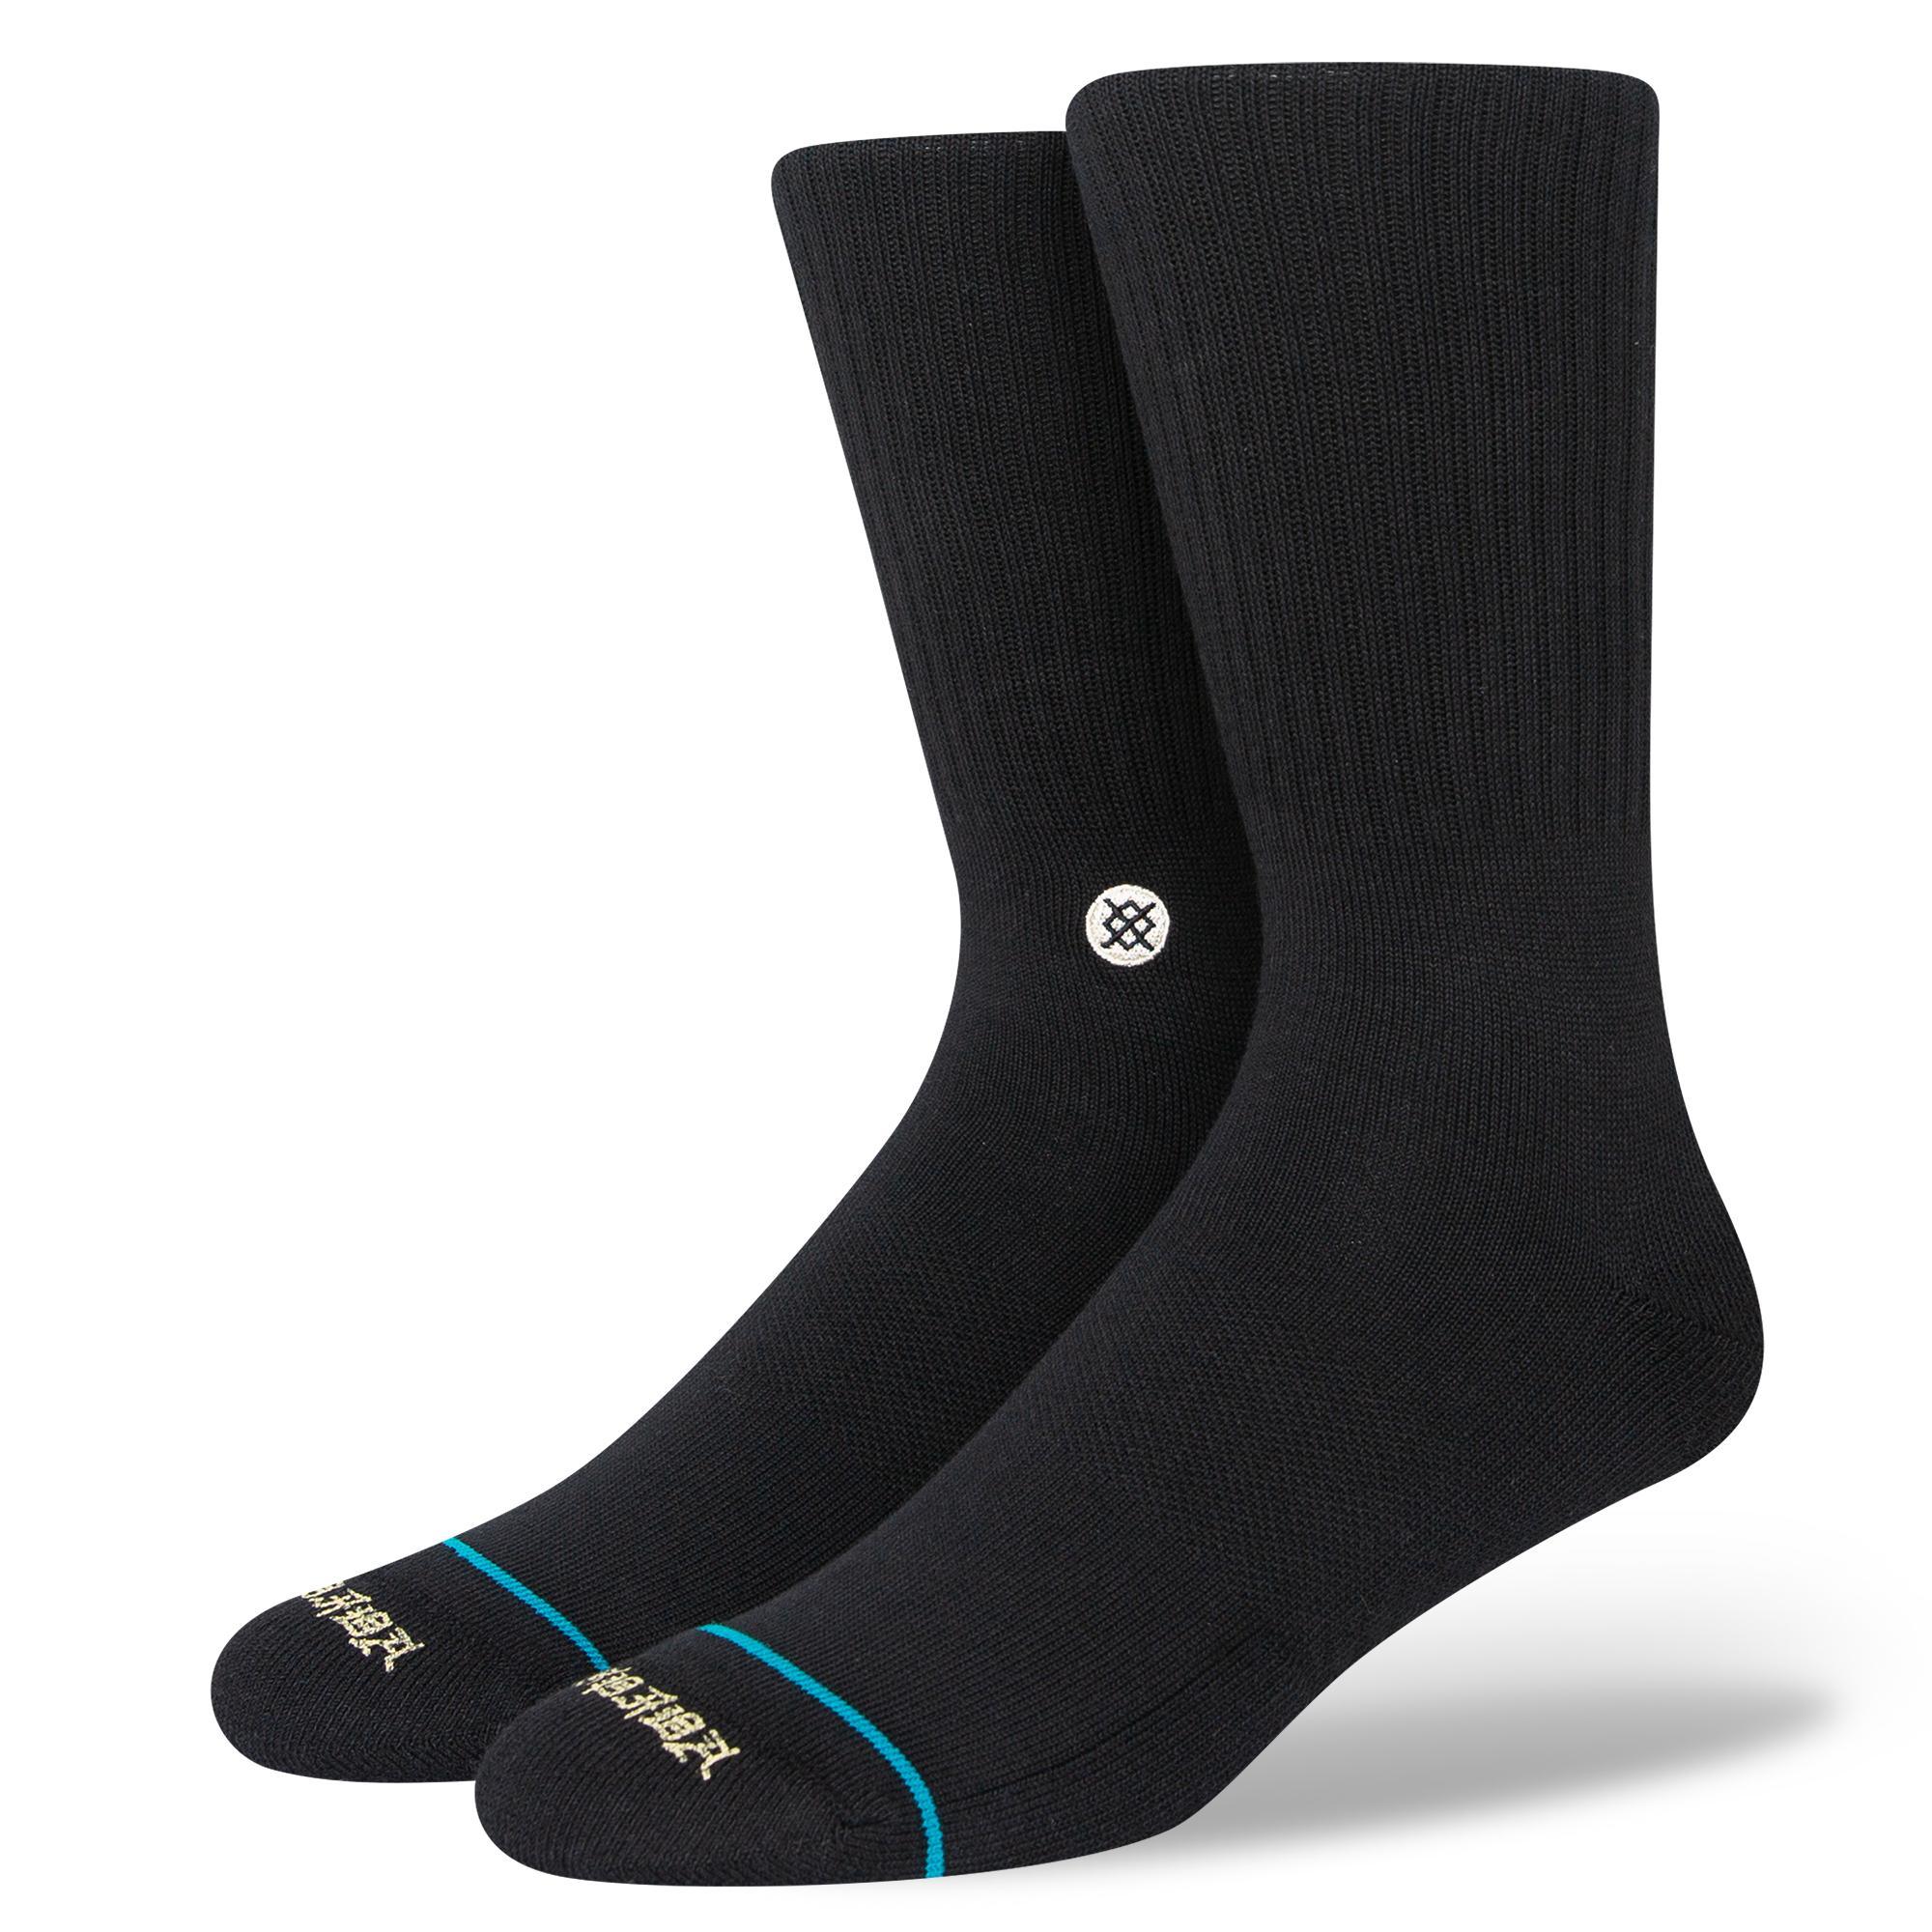 Donovan Mitchell X Stance Spyda Crew Socks Product Image